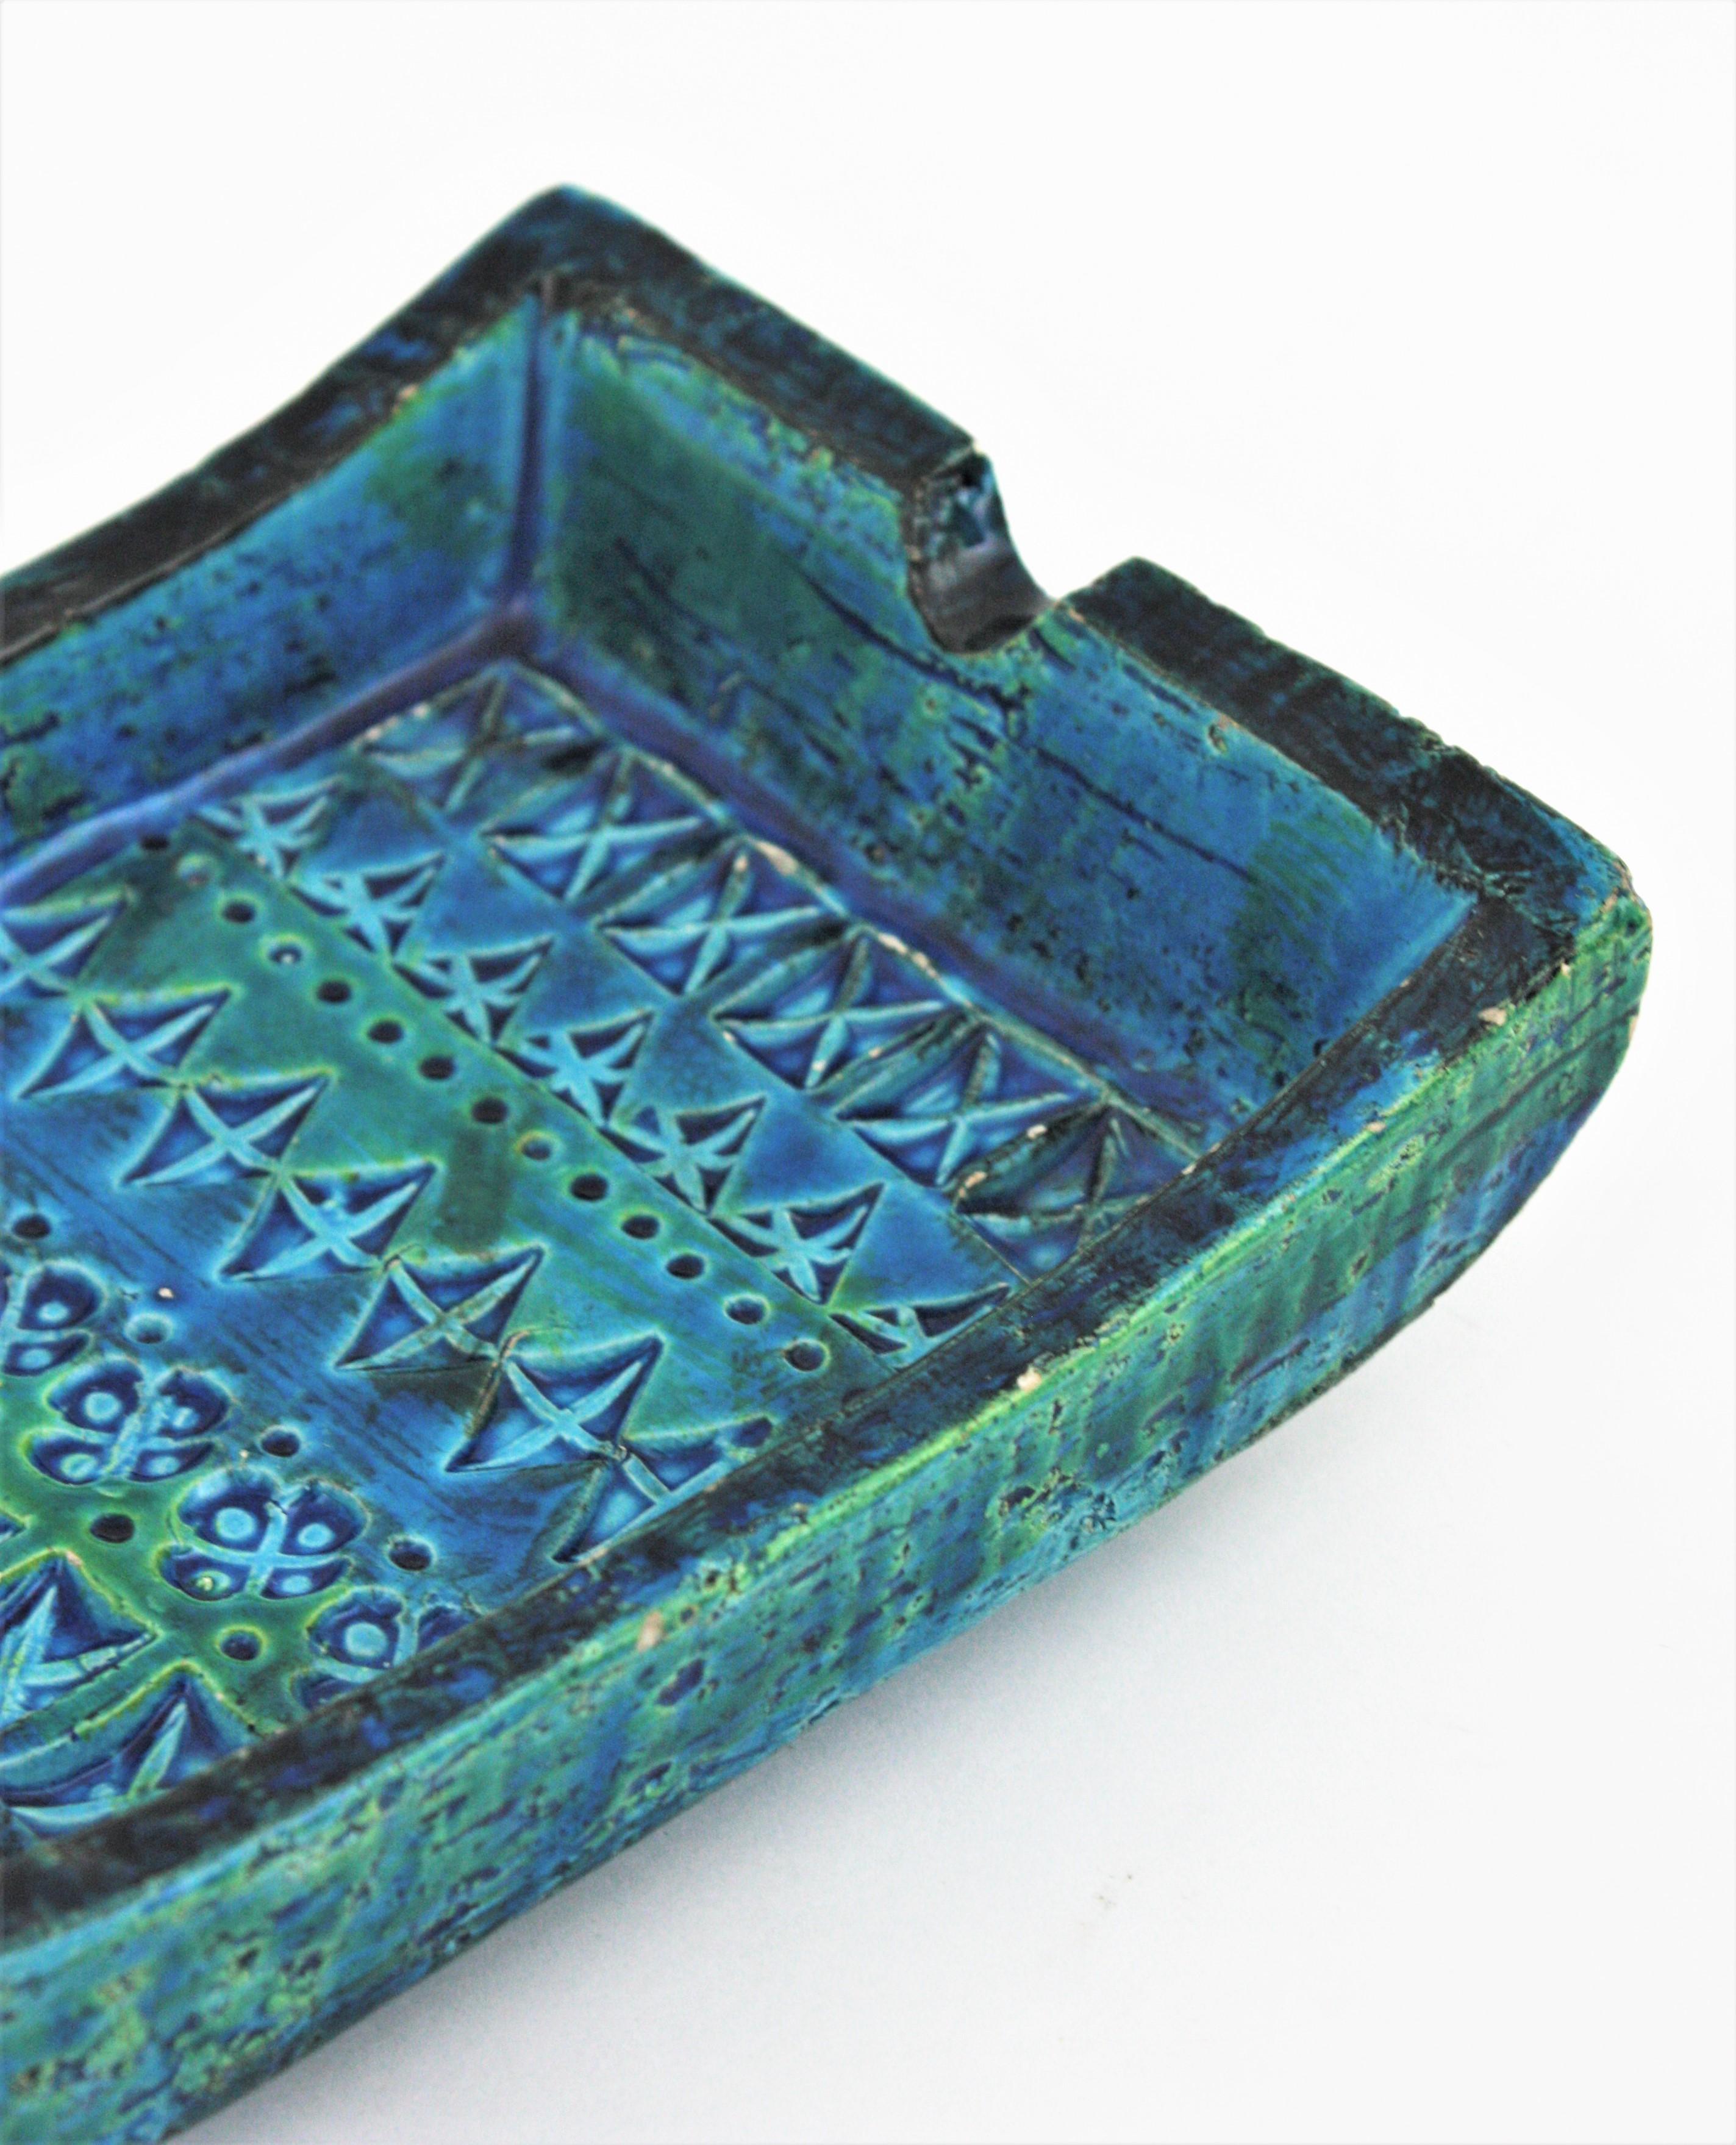 Aldo Londi Bitossi Rimini Blue Glazed Ceramic Rectangular Ashtray Bowl Videpoche For Sale 2